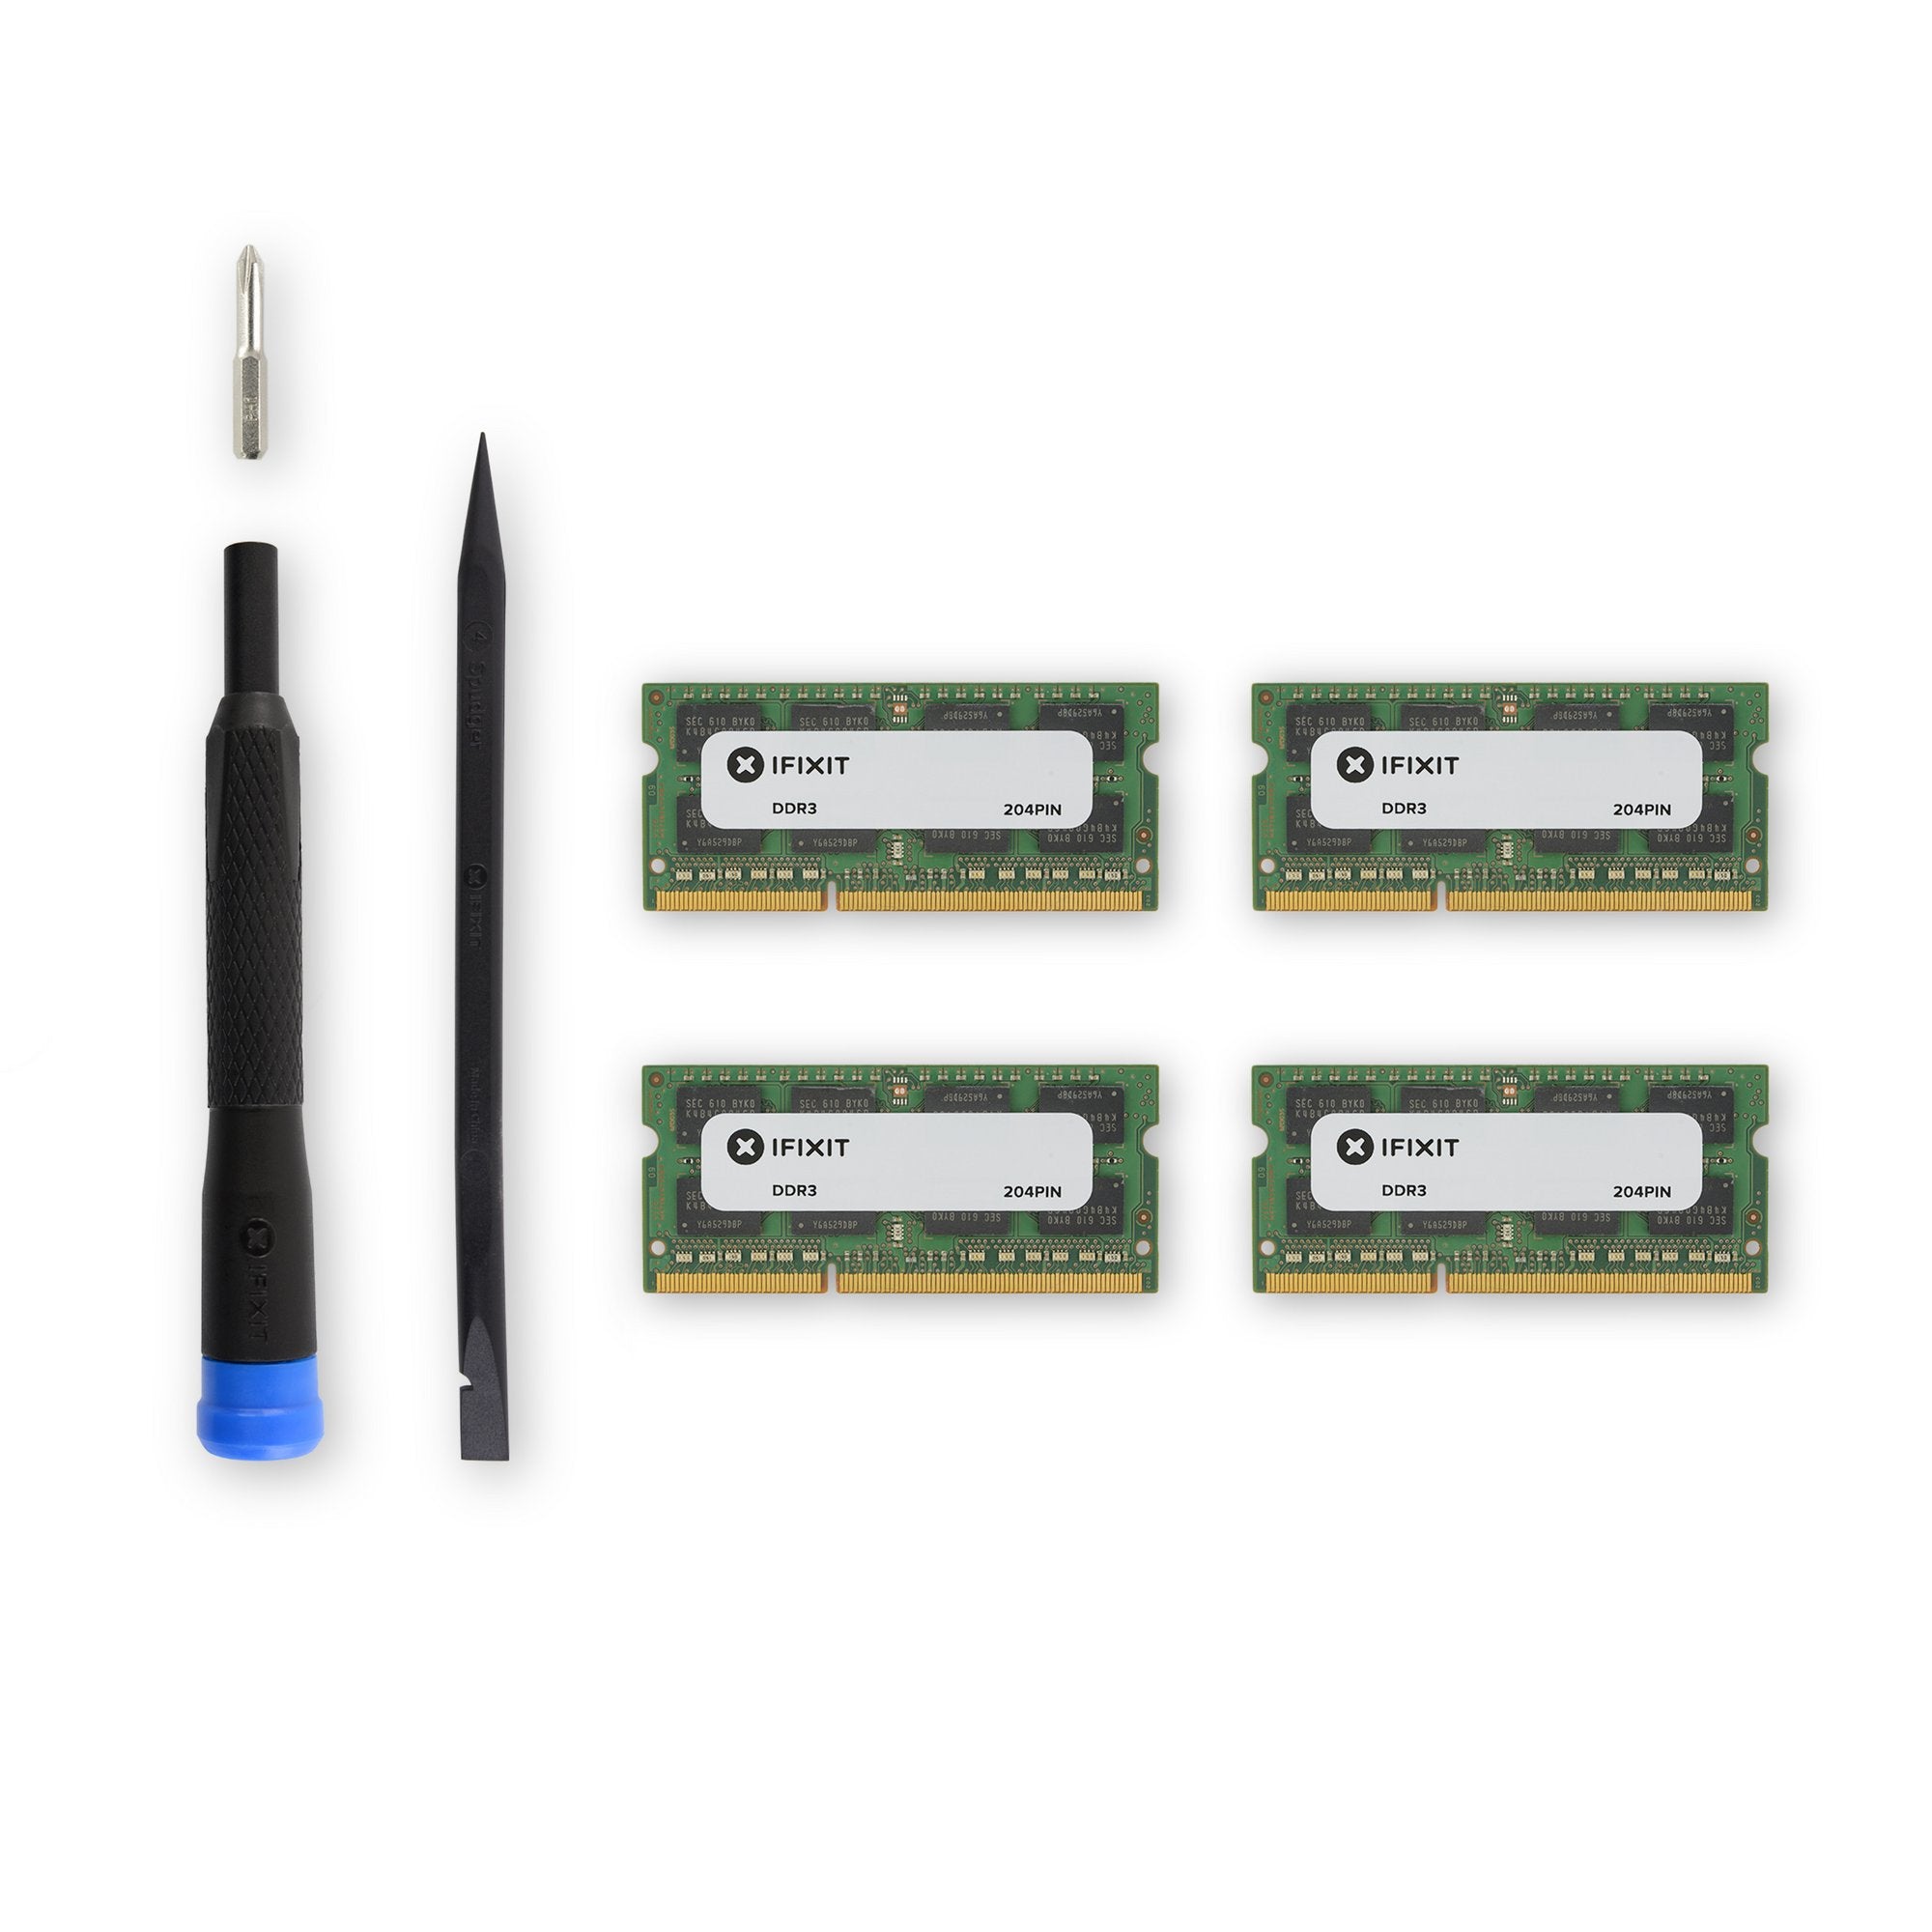 iMac 21.5" EMC 2389 (Mid 2010) Memory Maxxer RAM Kit